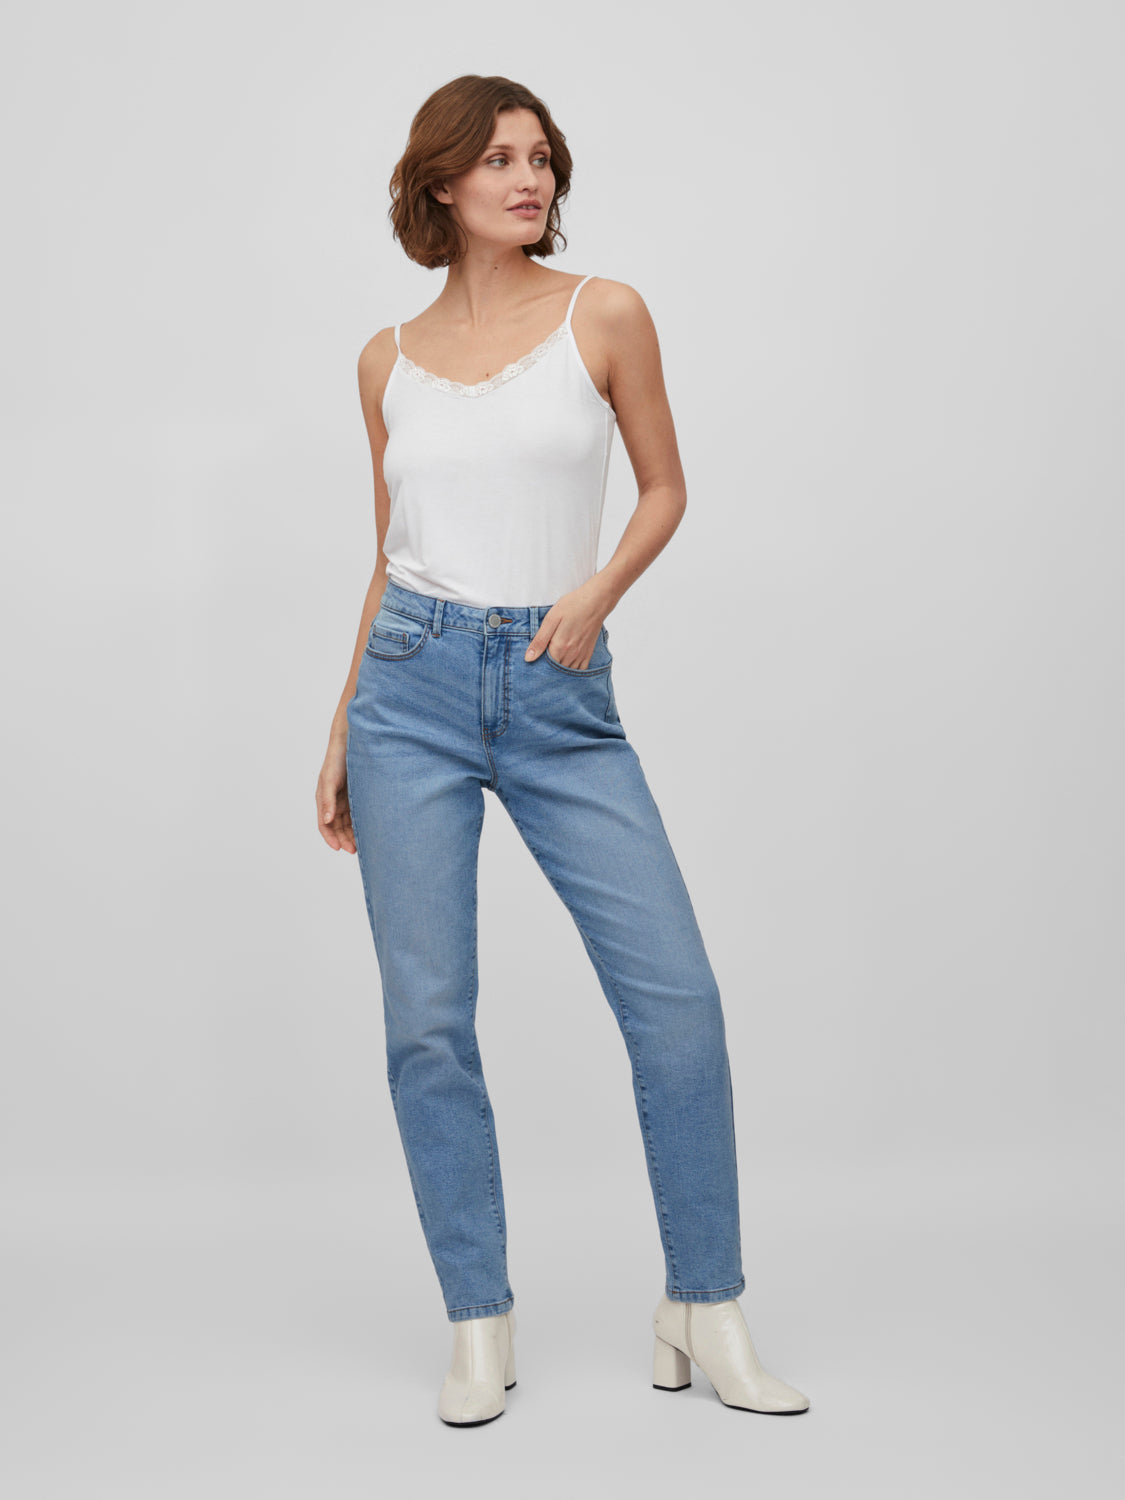 VINAOMI Jeans - Light Blue Denim